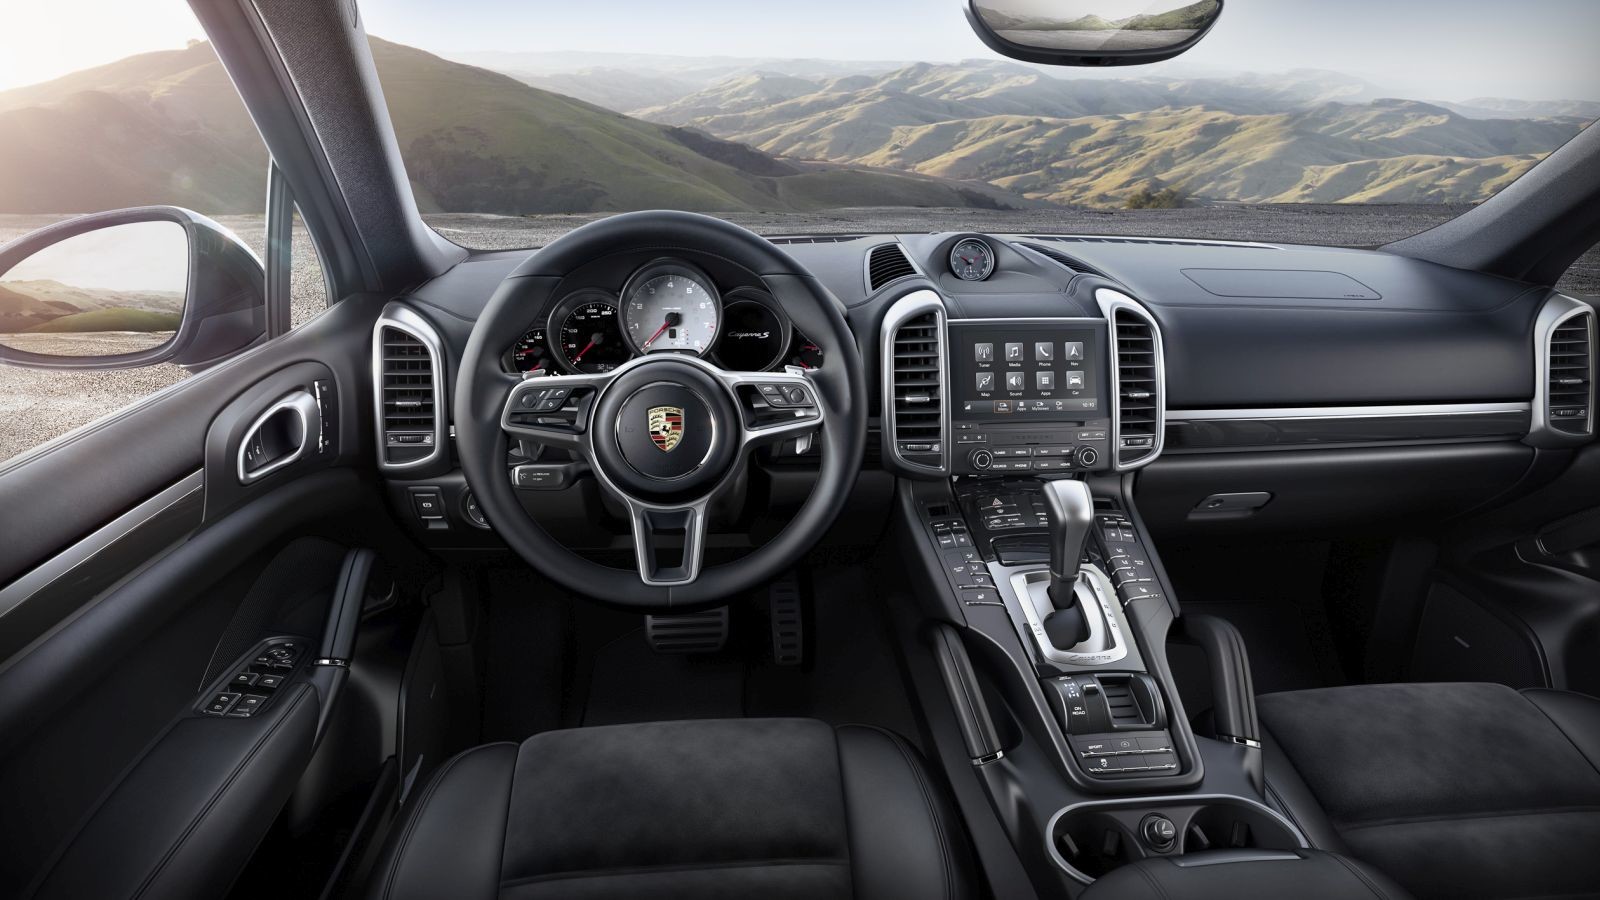 Porsche Cayenne S Platinum Edition Launched in India Interior Dashboard Profile